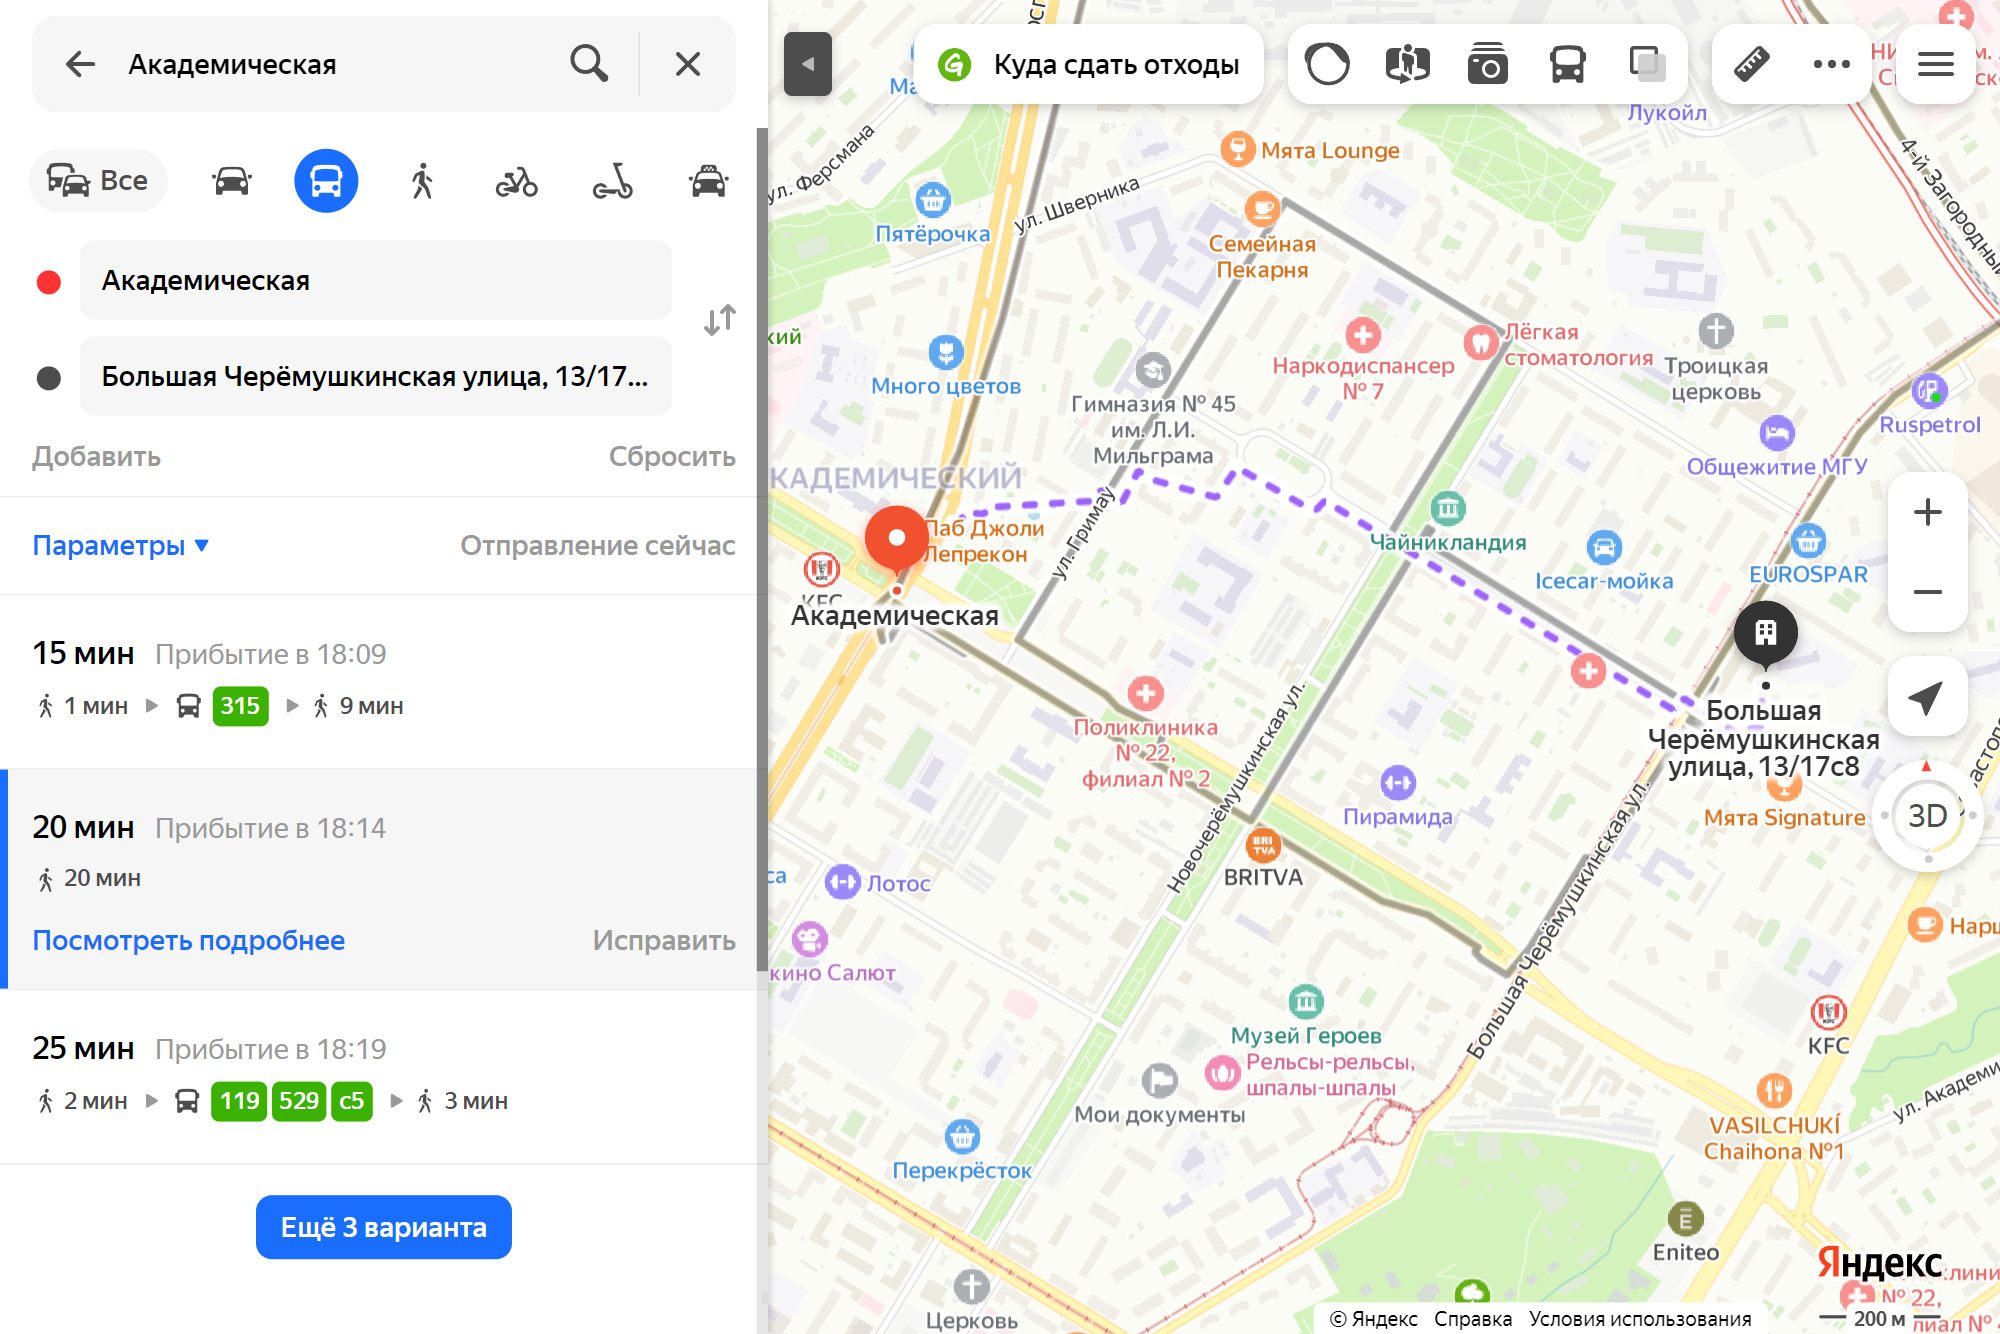 Тот самый маршрут от метро до офиса, благодаря которому я полюбила Академический. Источник: yandex.ru/maps